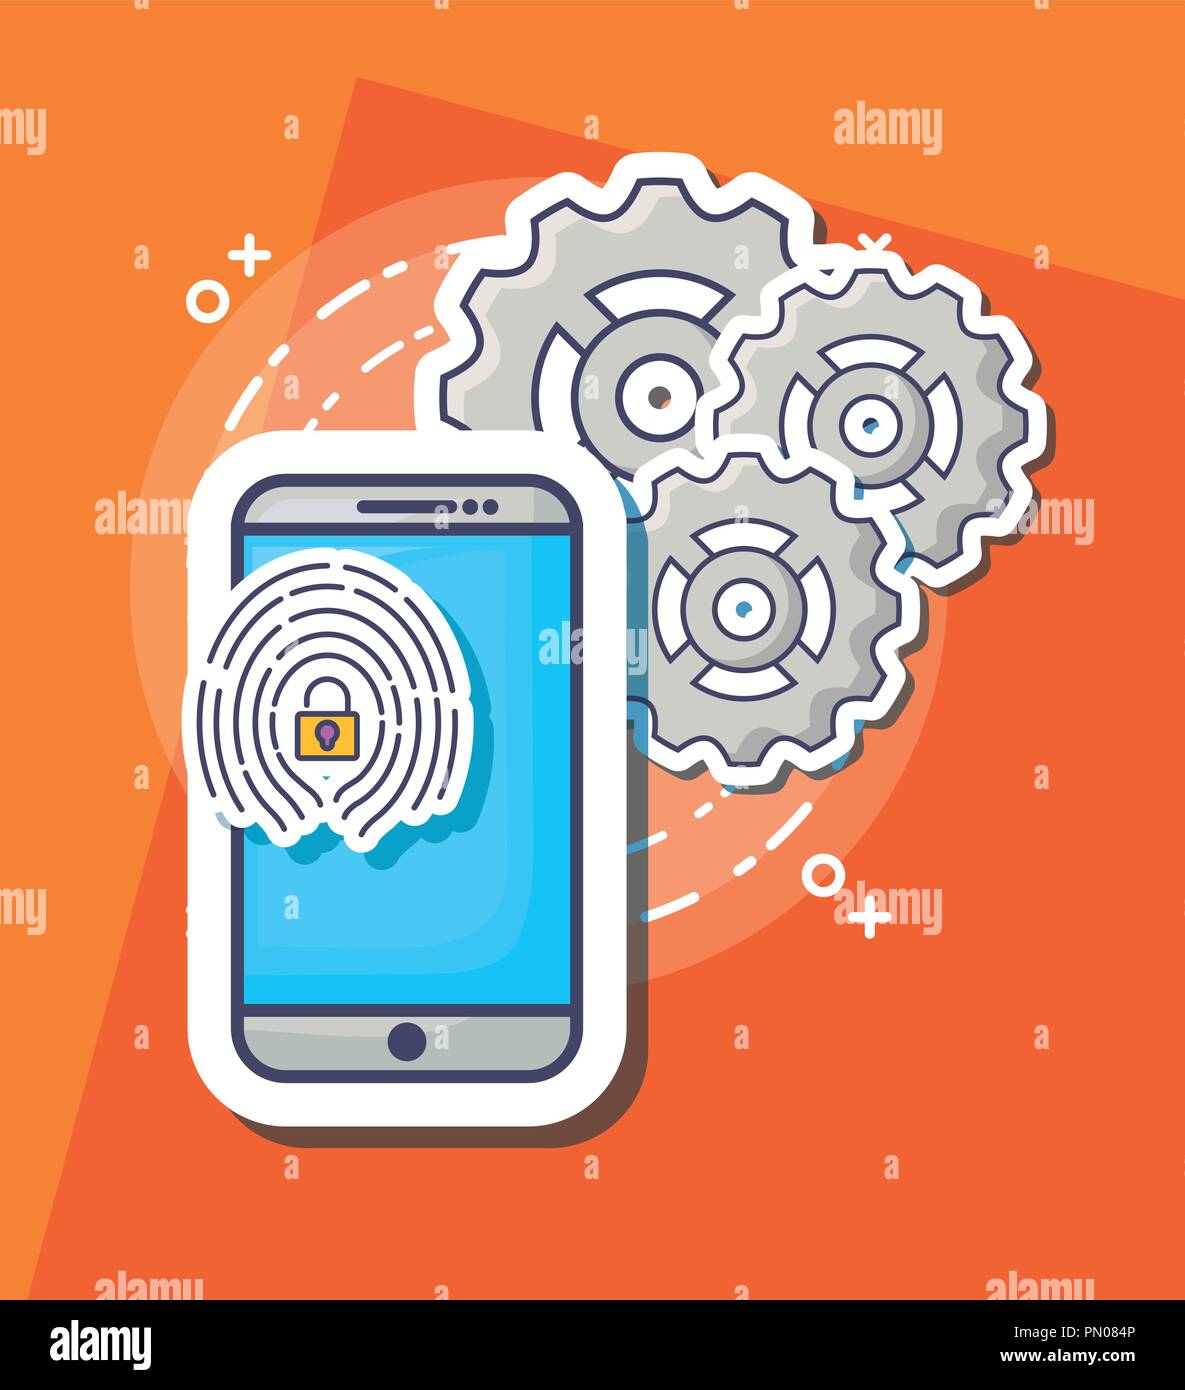 smartphone access fingerprint security innovation technology vector illustration Stock Vector